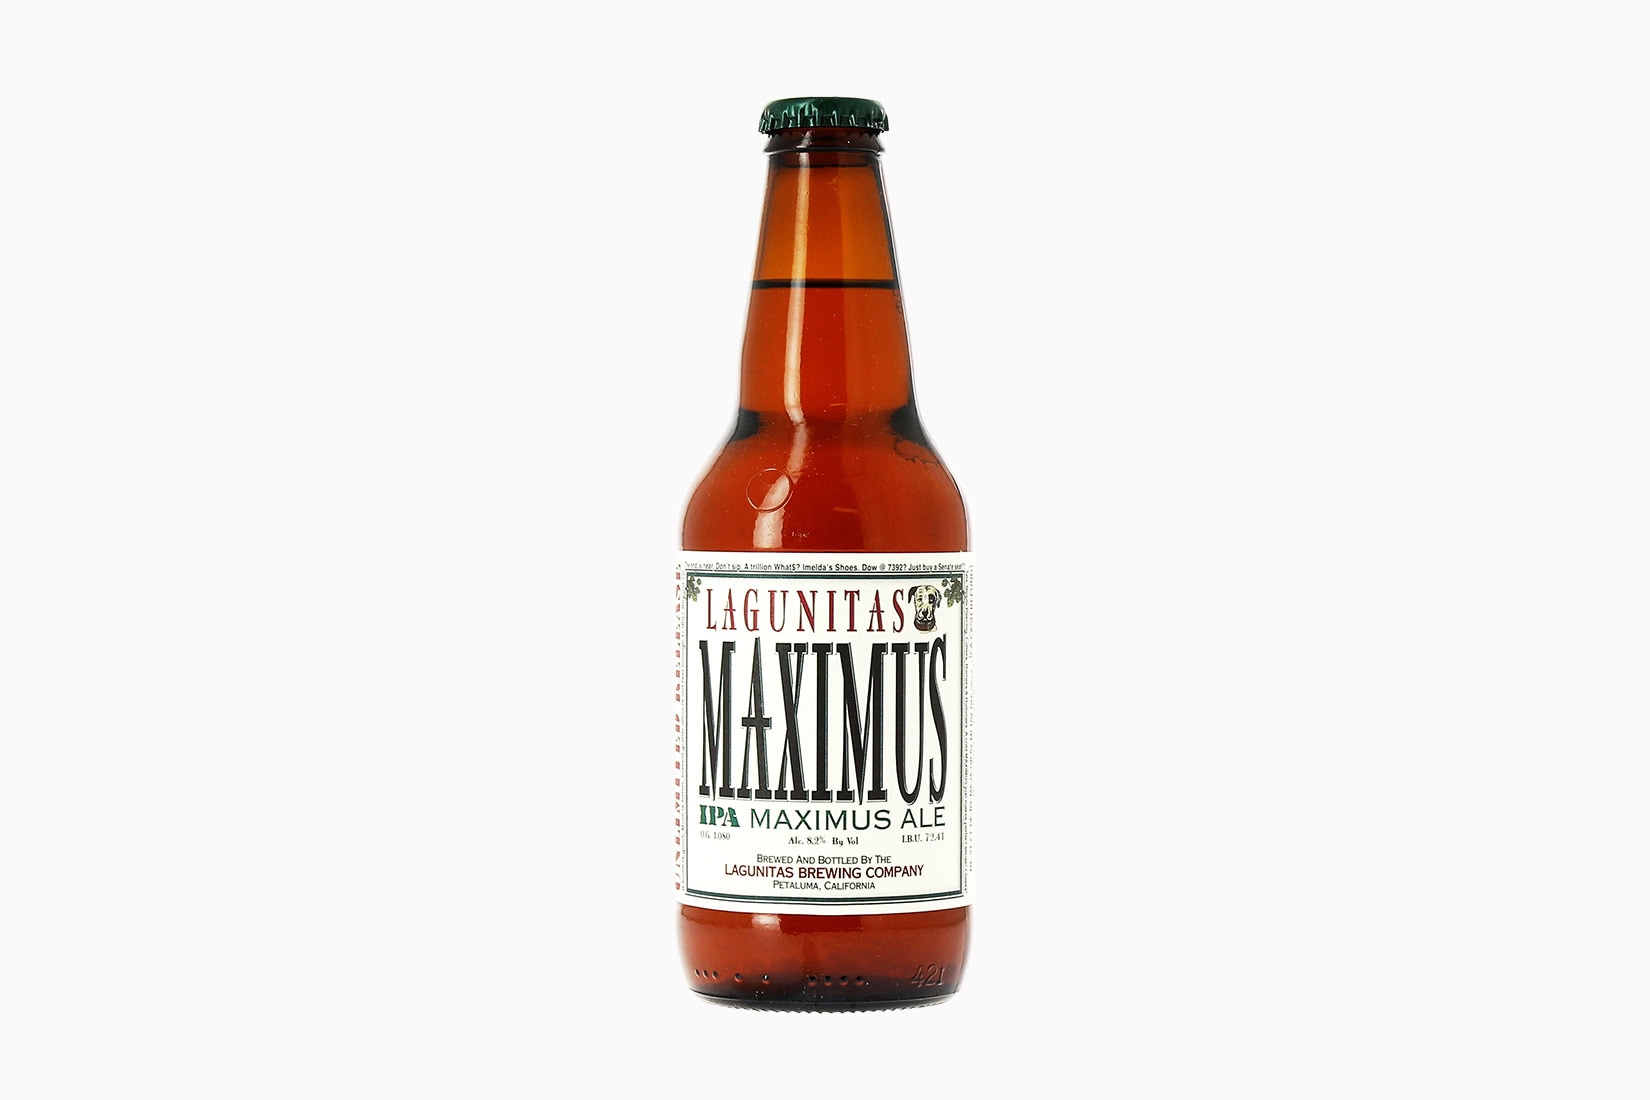 meilleures marques de bière lagunitas maximus ipa - Luxe Digital